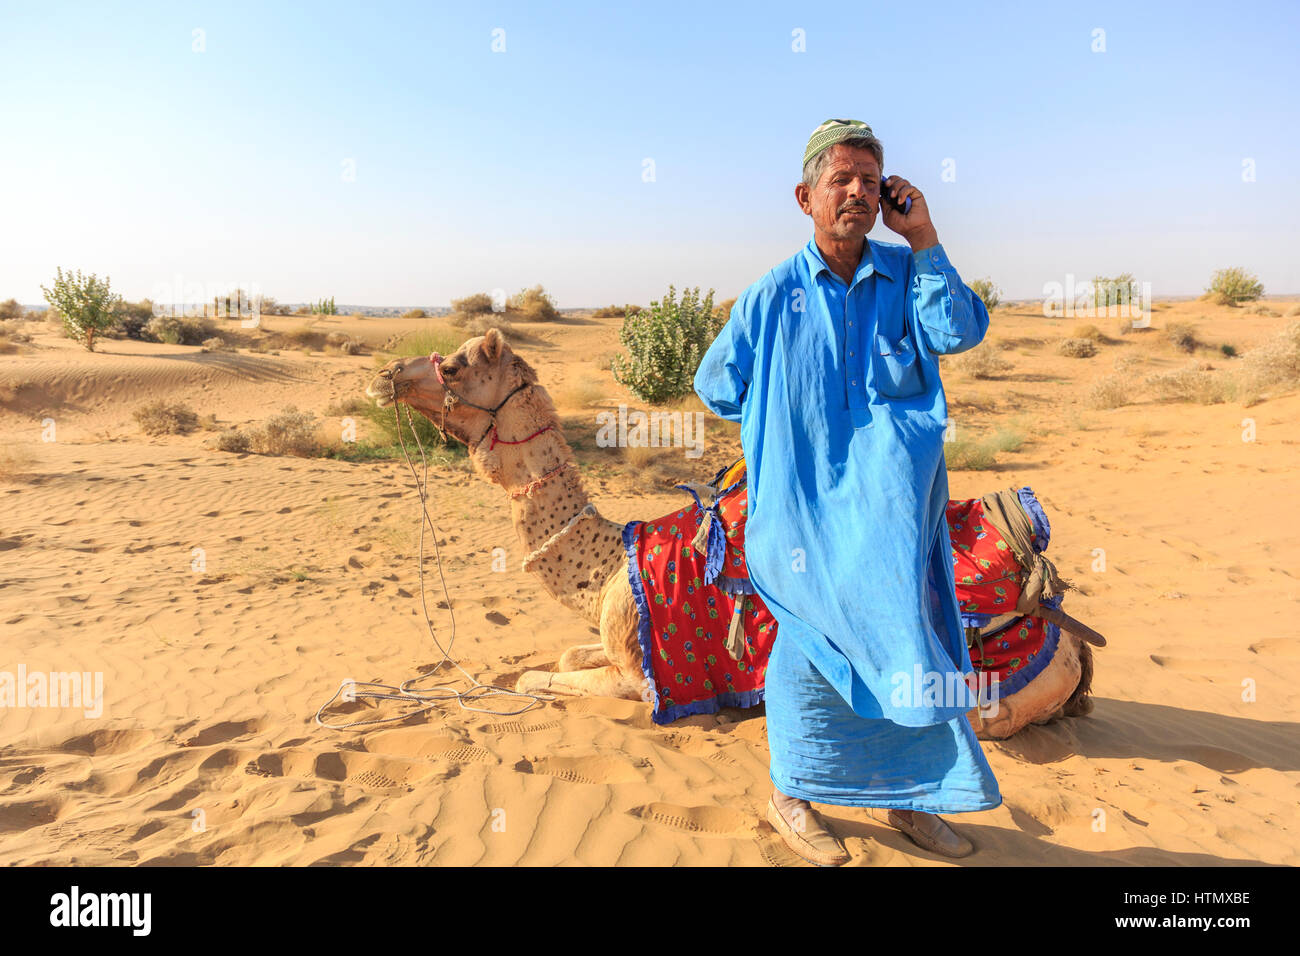 Camel safari, Thar Desert, Rajasthan, India Stock Photo